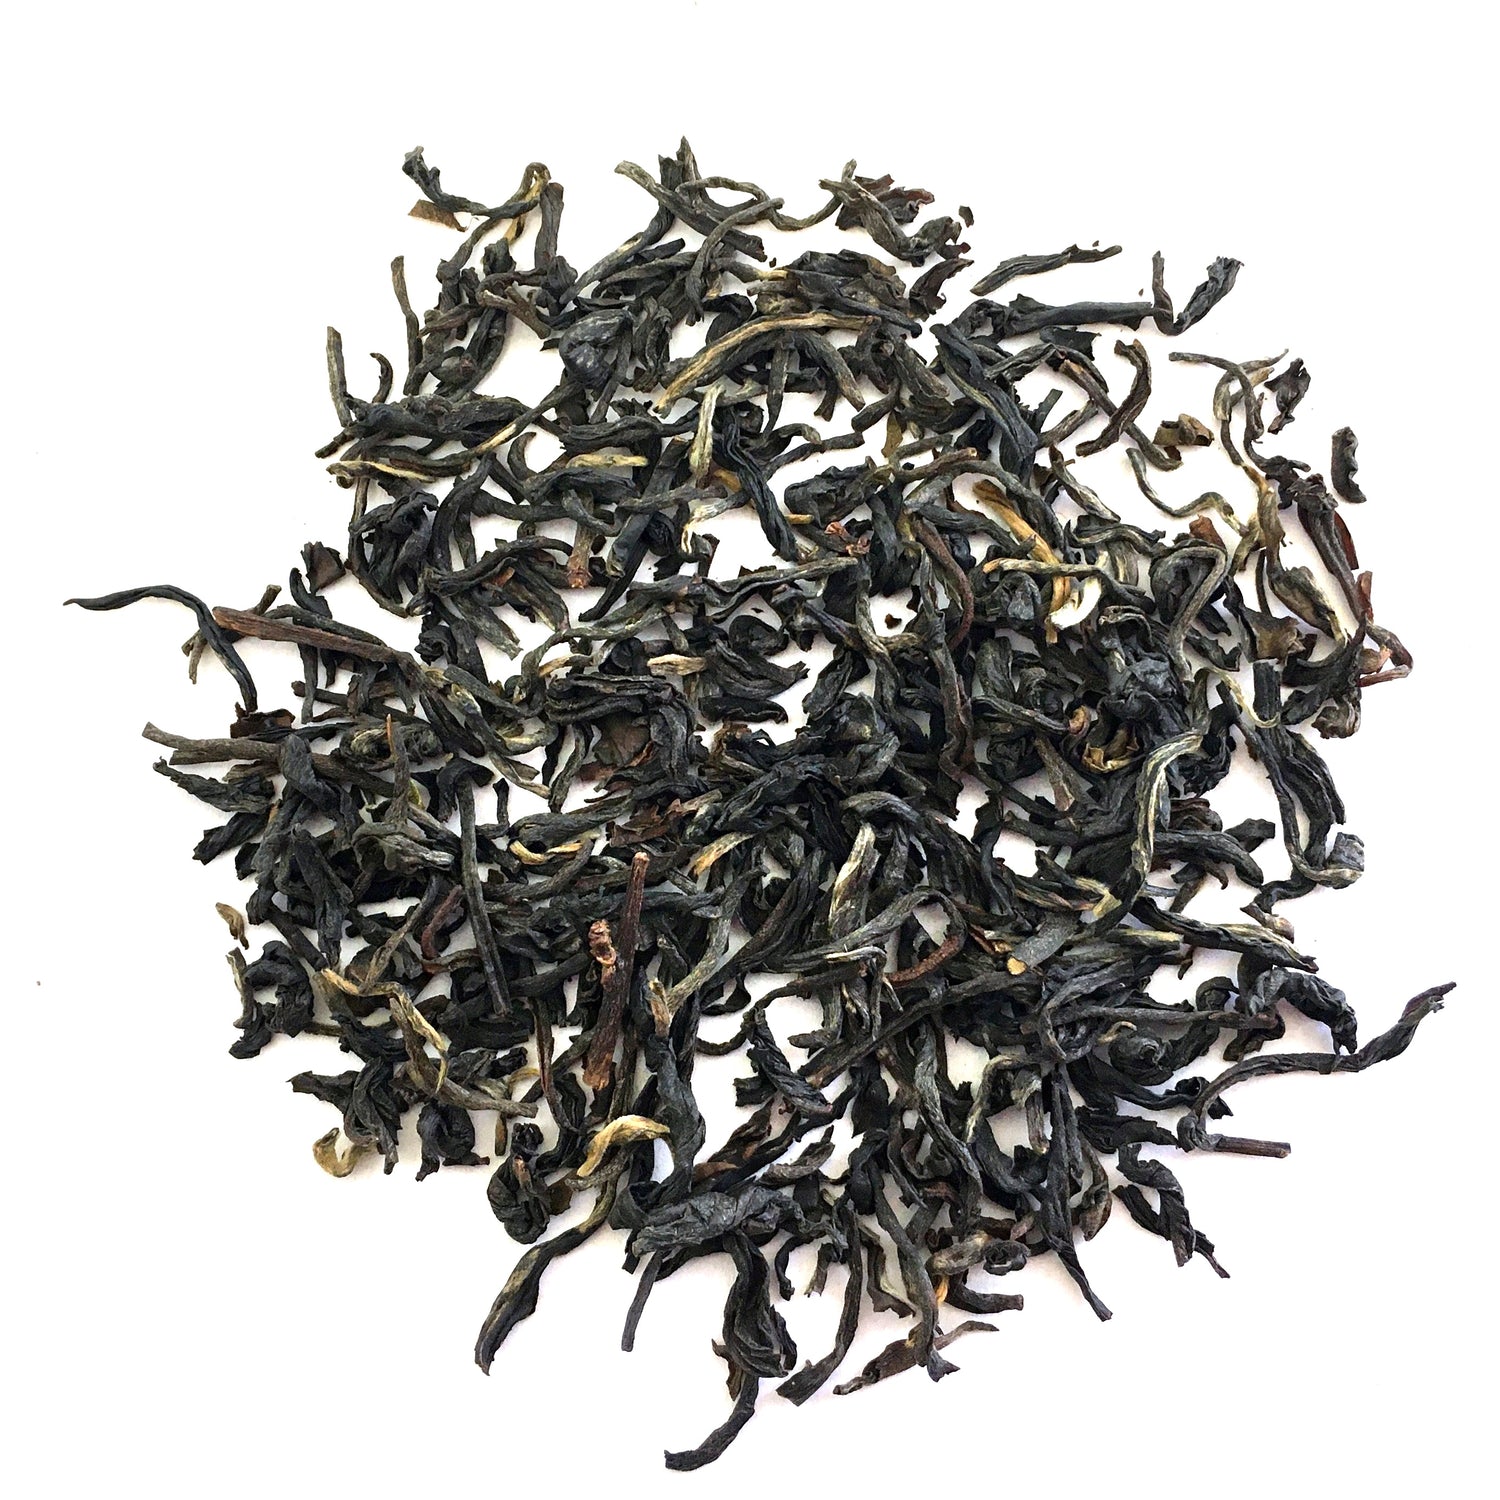 ORGANIC BLACK TEA FROM NEPAL